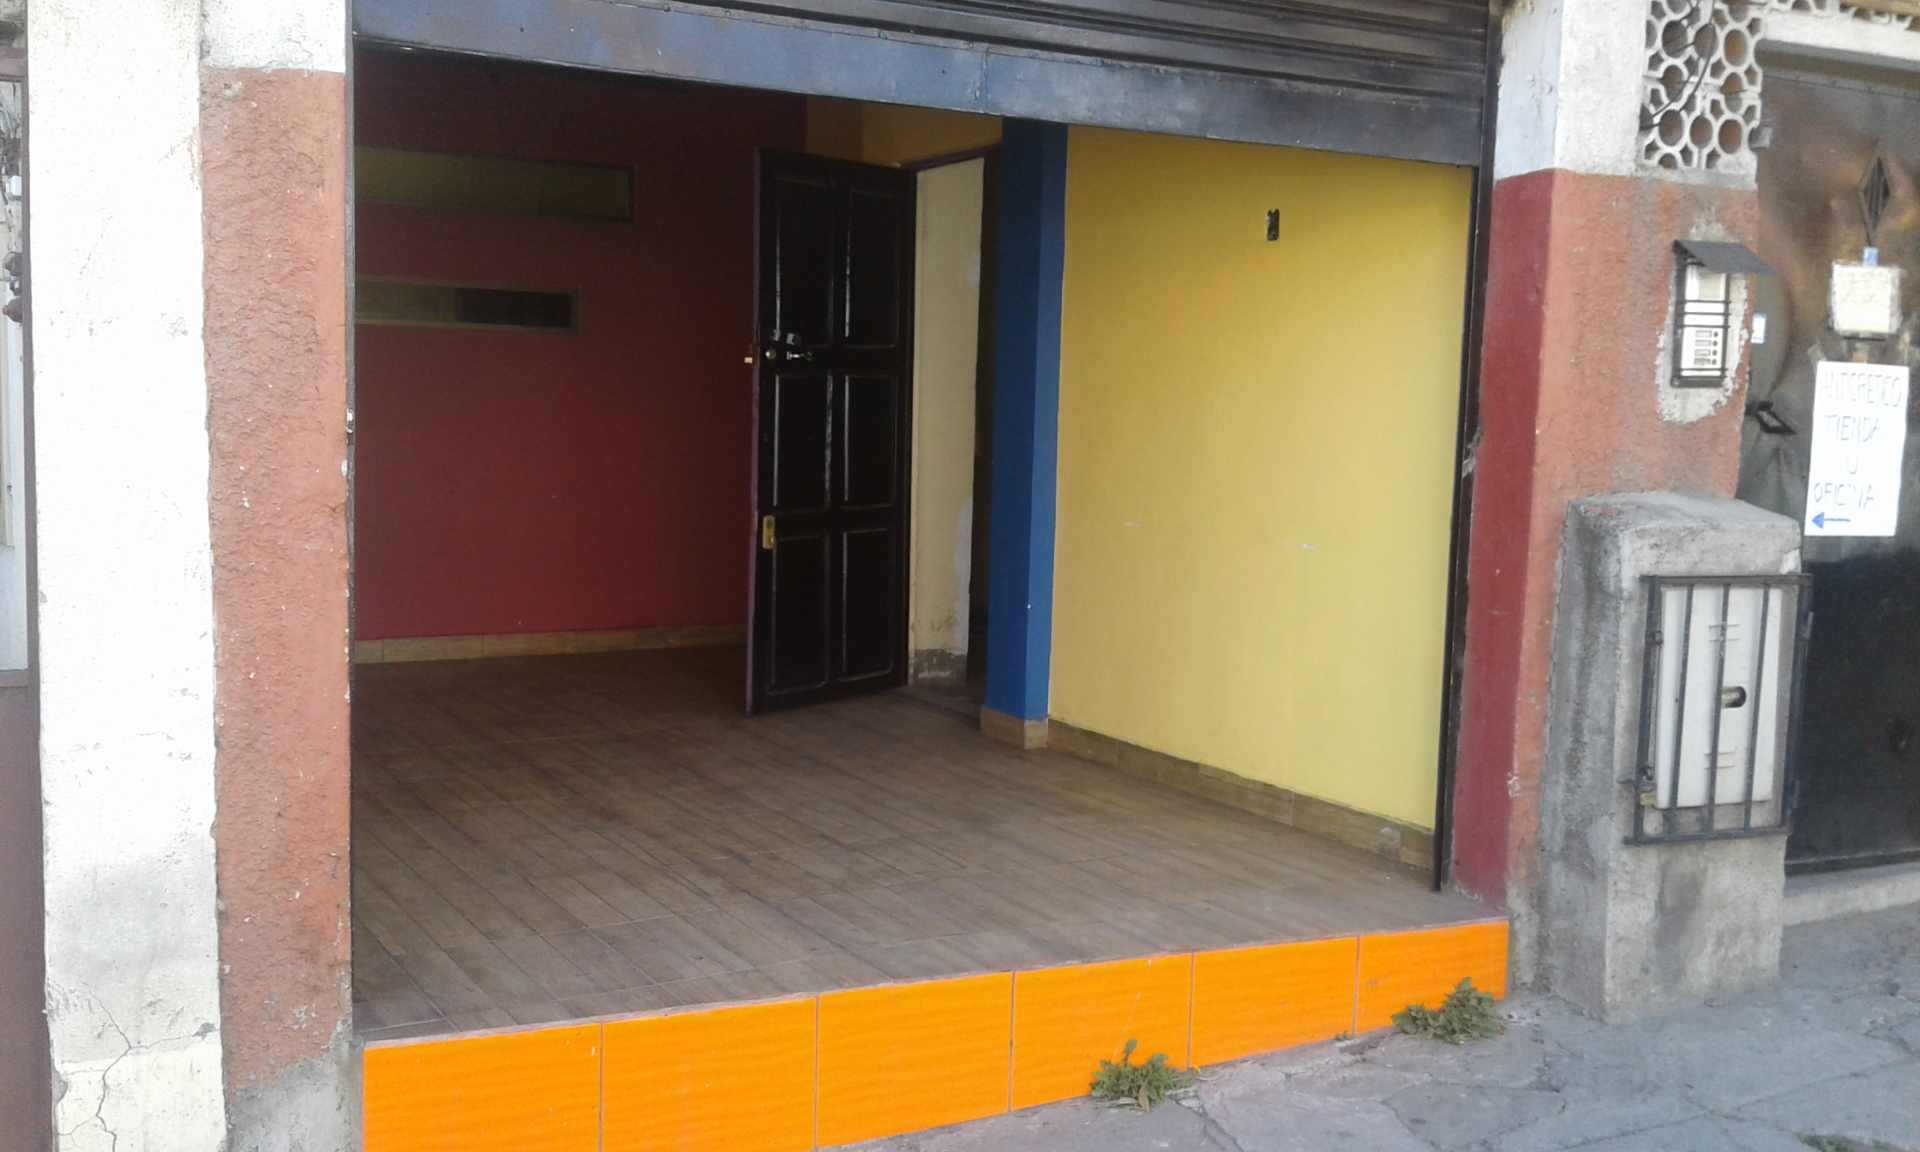 Oficina Calle Cuba No 1652A entre Carrasco y Pasoskanki zona de Miraflores La Paz - Bolivia (OFERTABLE y entrega inmediata) Foto 1